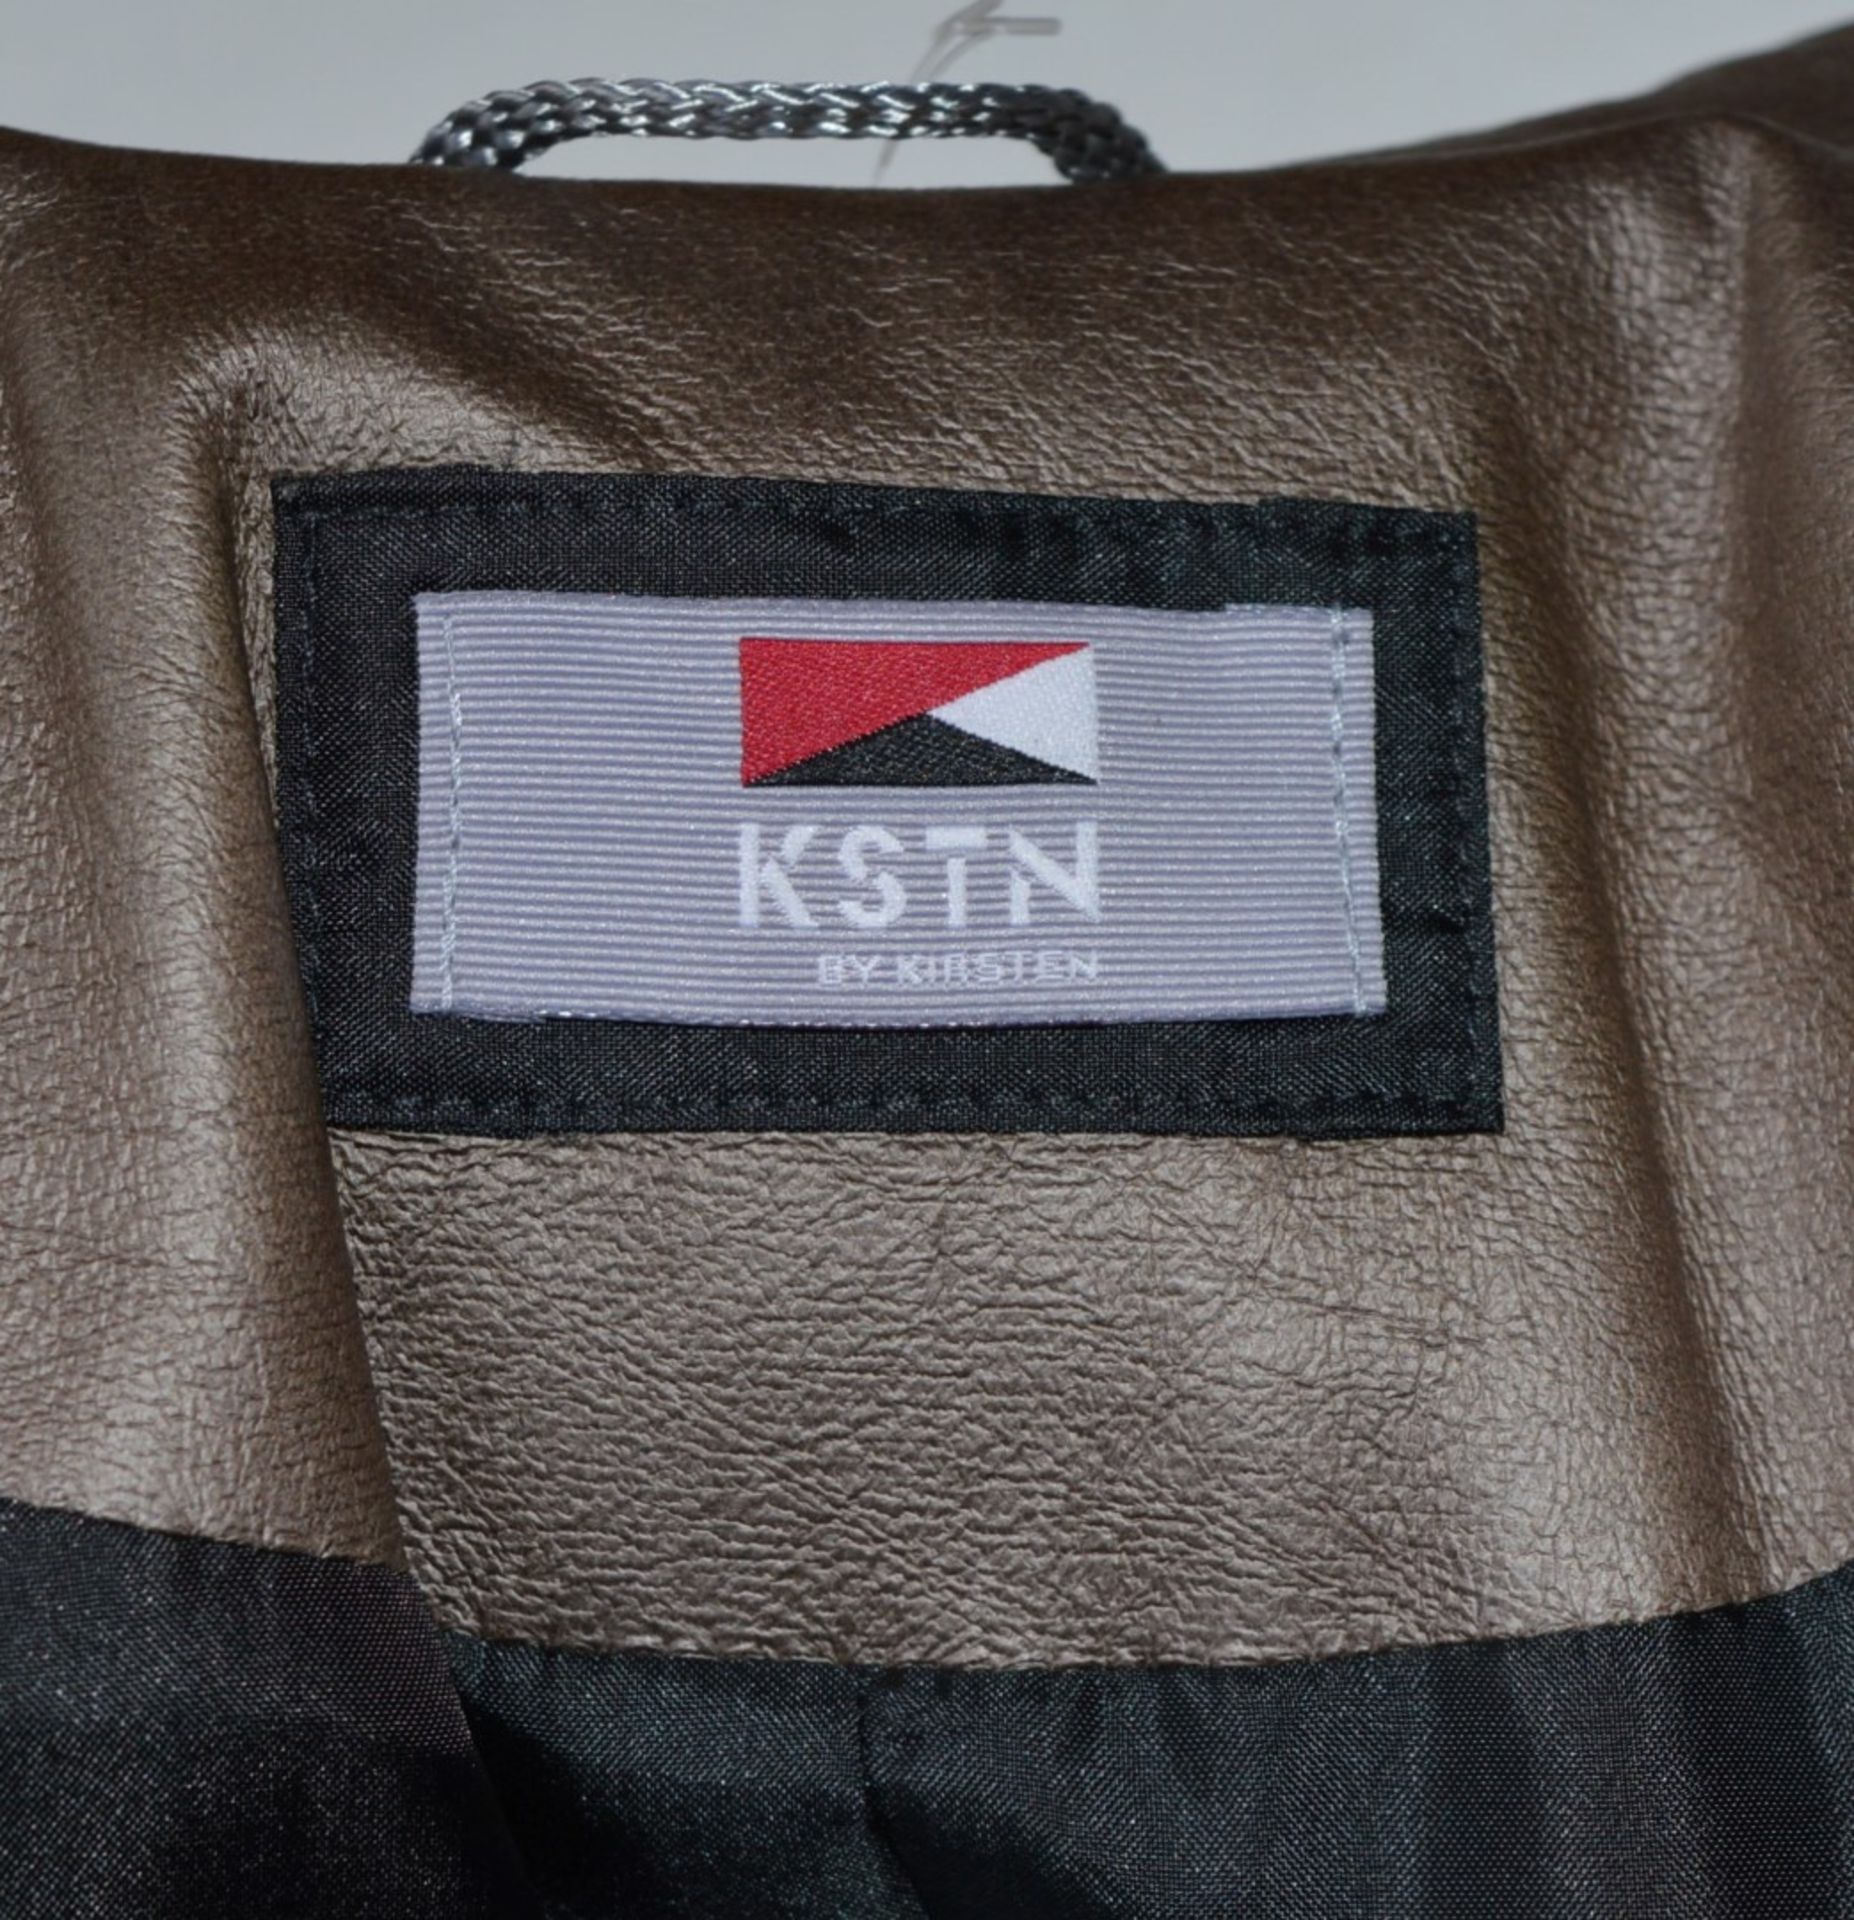 1 x Steilmann KSTN By Kirsten Womens Faux Leather Coat - Functional Pockets - Zip Fastener - UK Size - Image 10 of 11